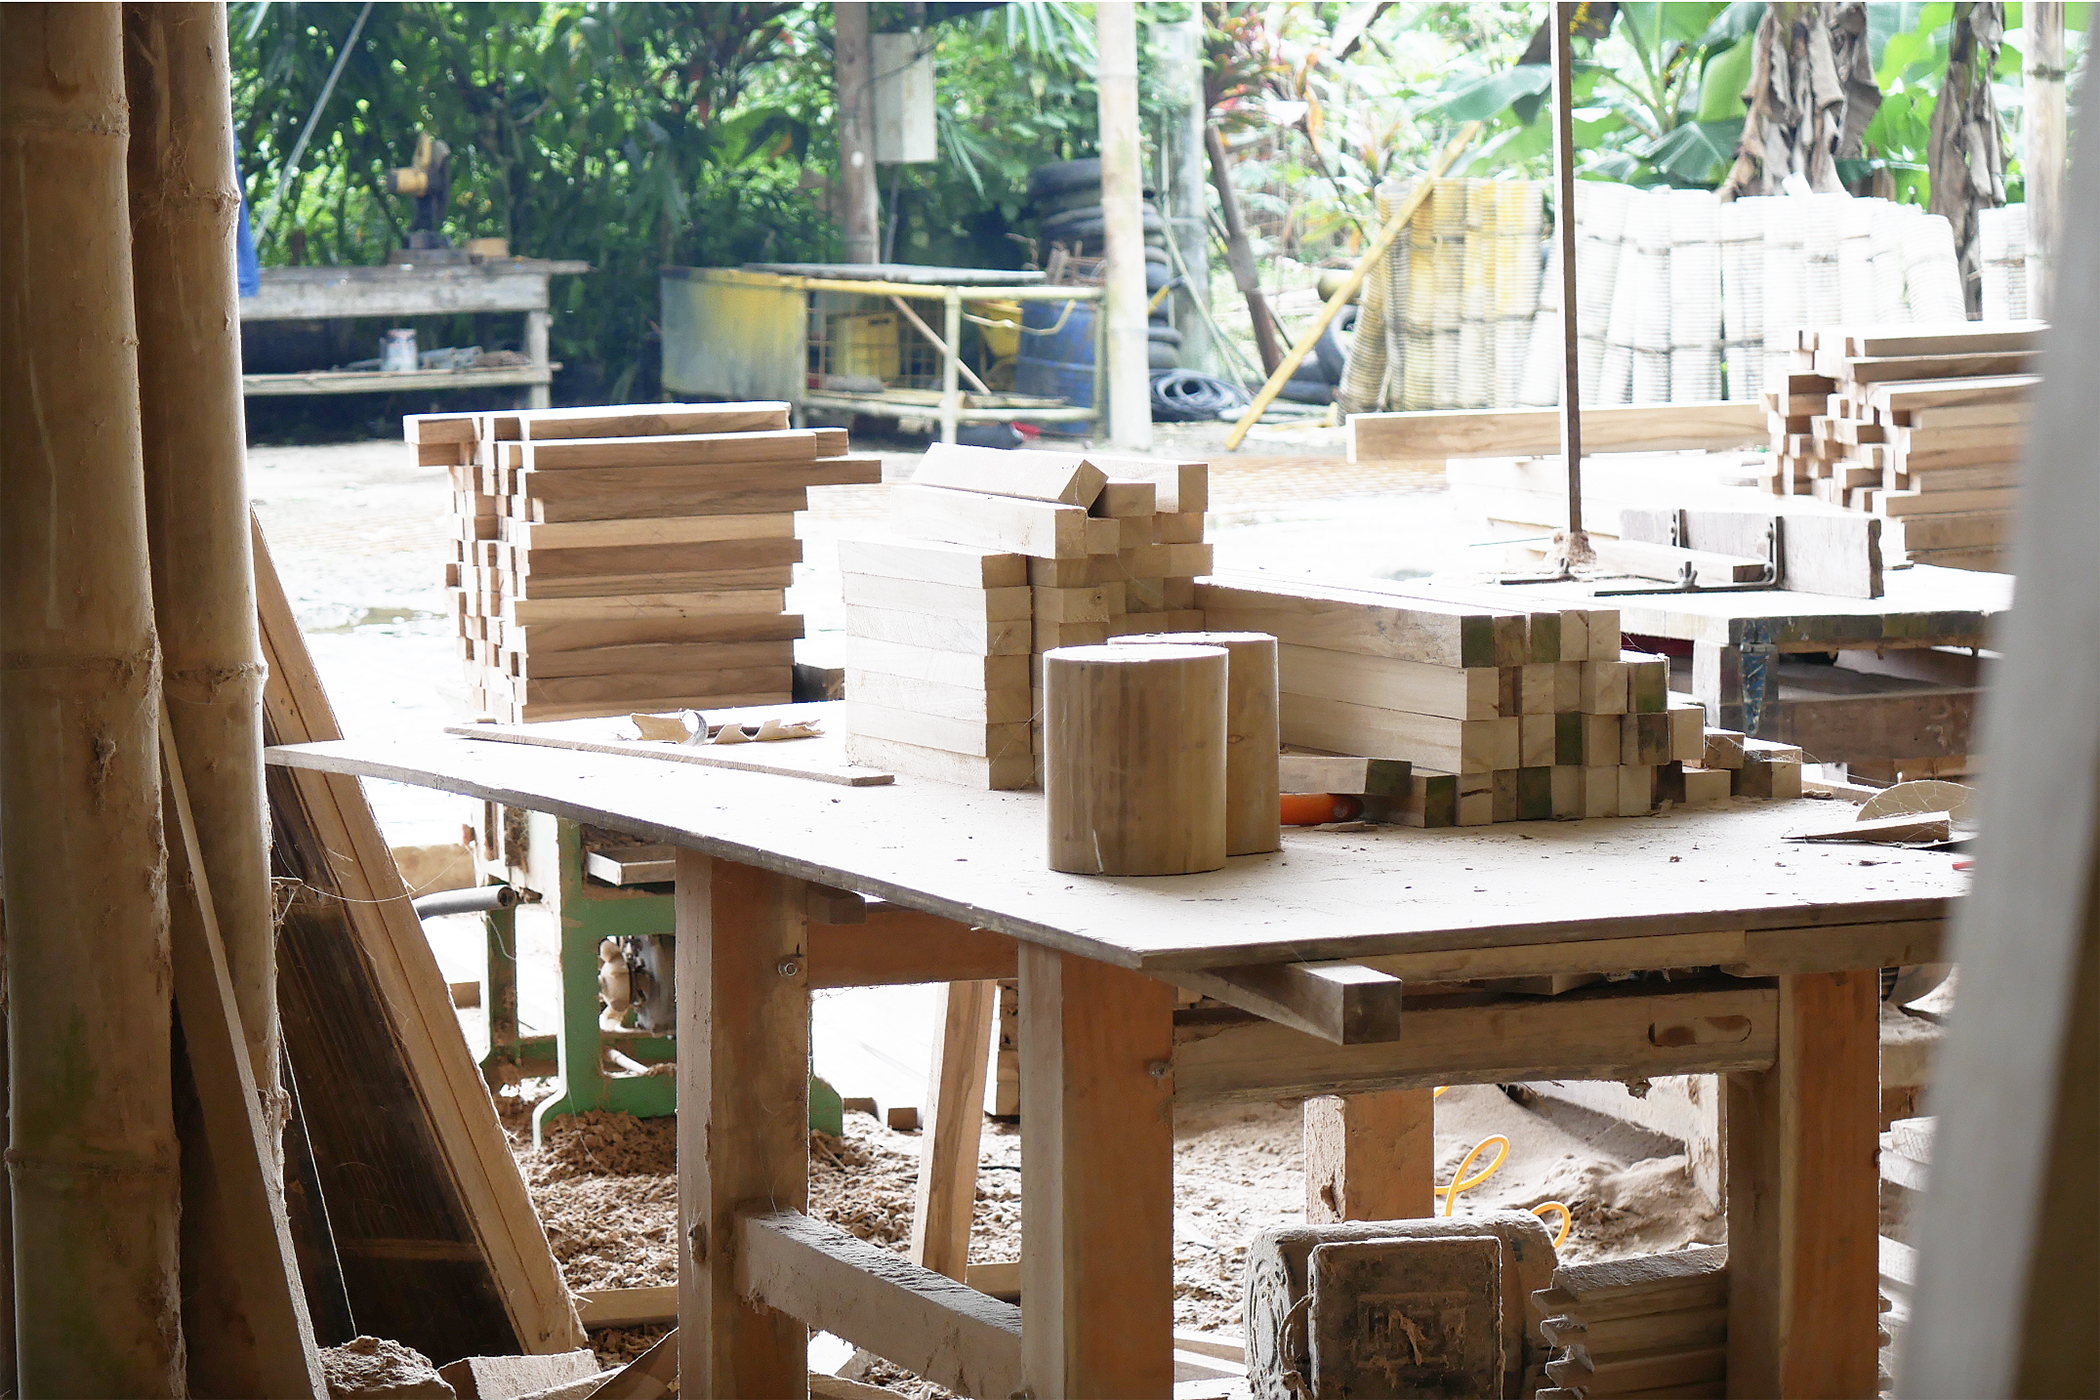 bamboo blocks for constructing houses in Ecuador